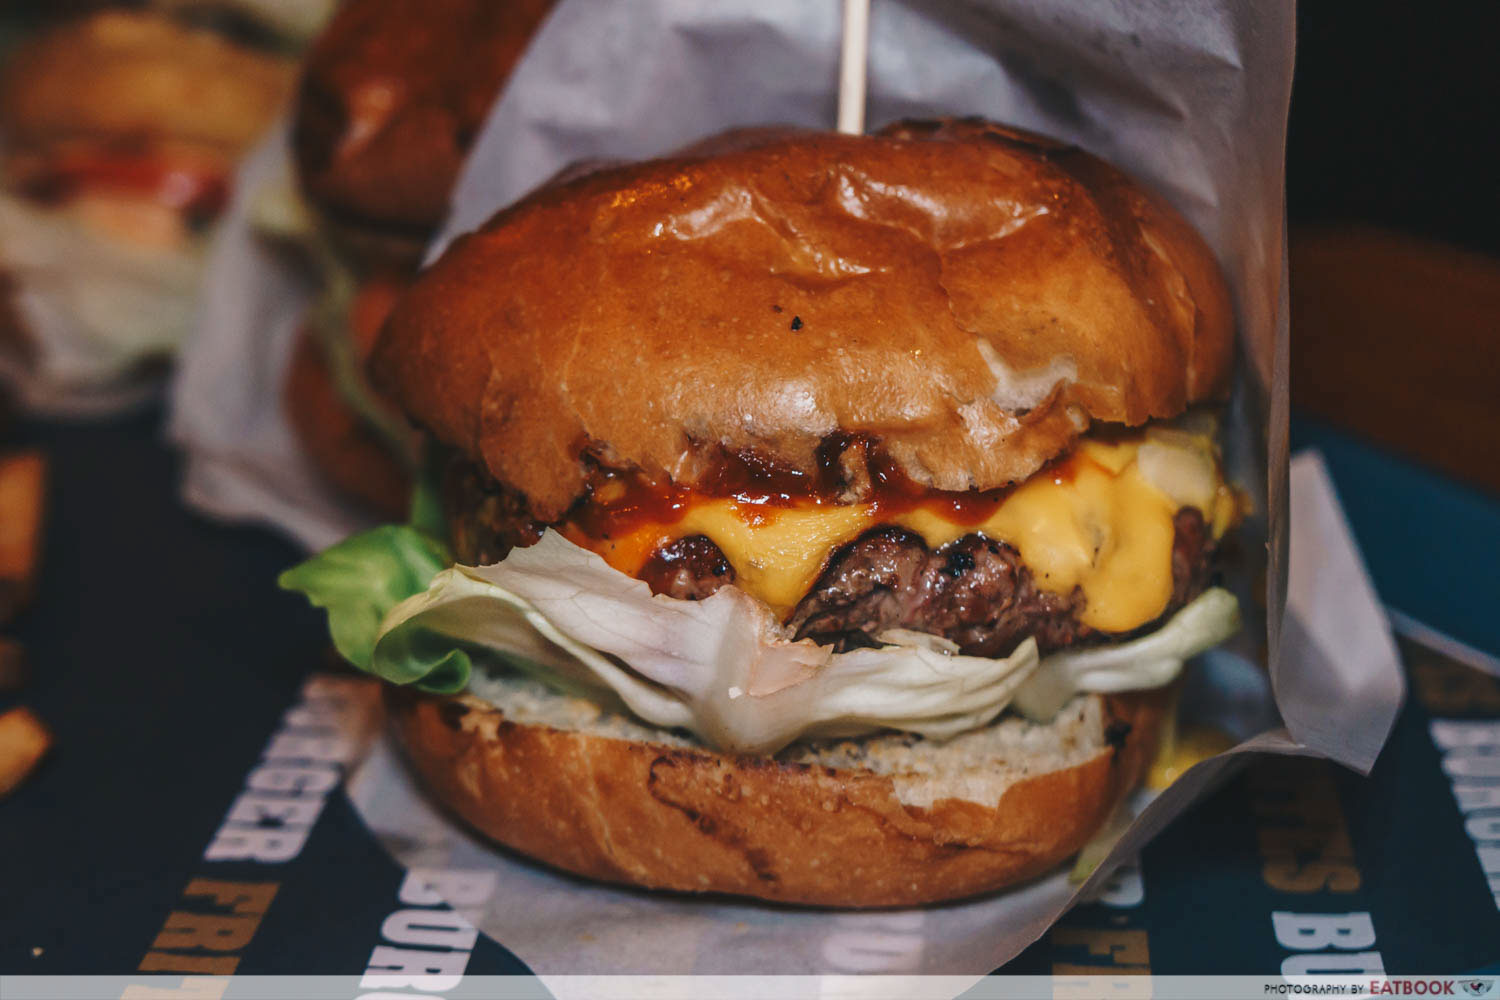 January New Restaurants - Angus Beef Patty Cheese Burger